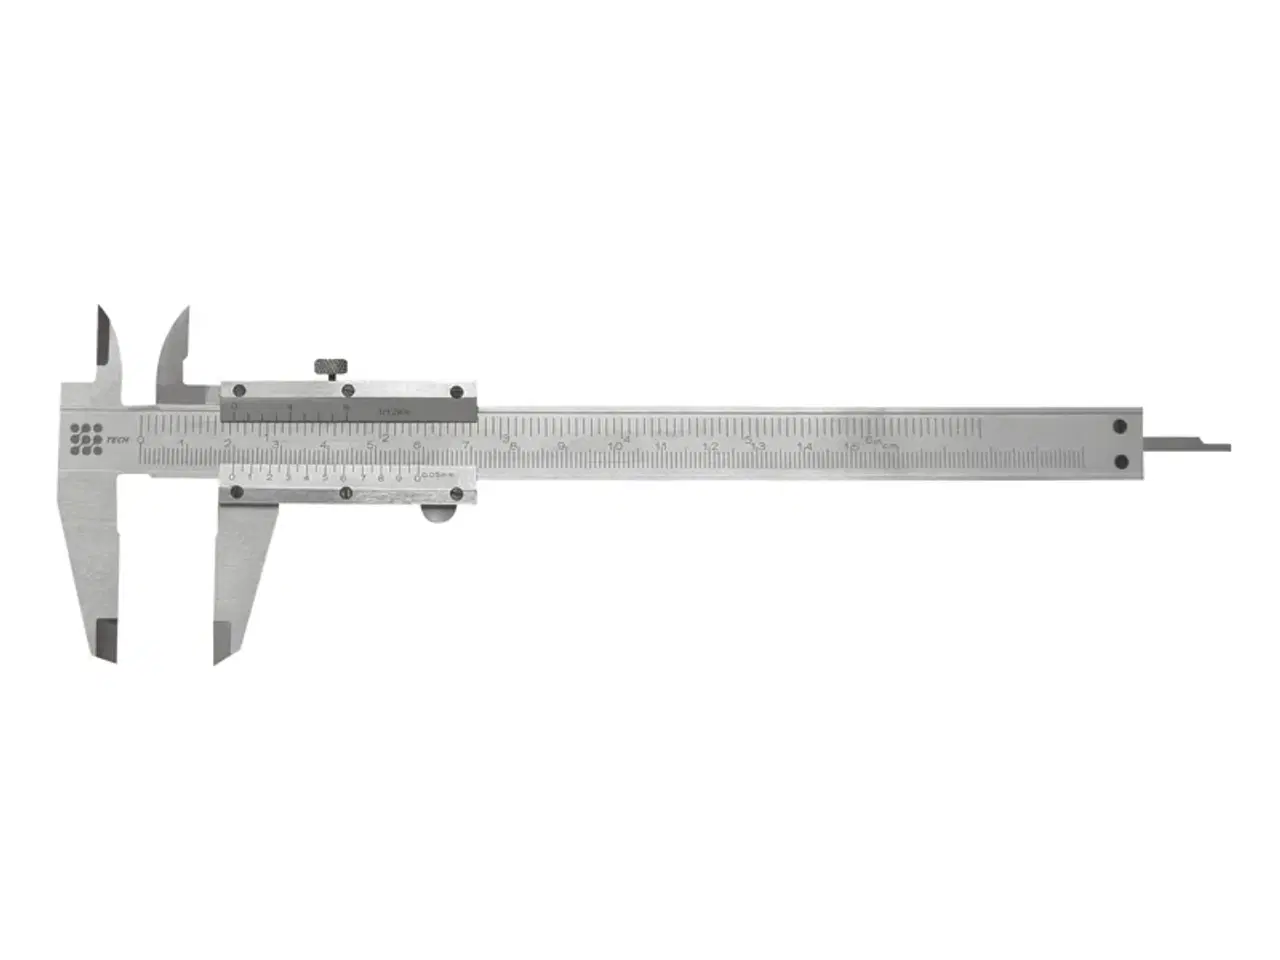 Billede 1 - Skydelære med skruelås 0-150x0,05 mm (TECH brand, Economy) og 40 mm kæber